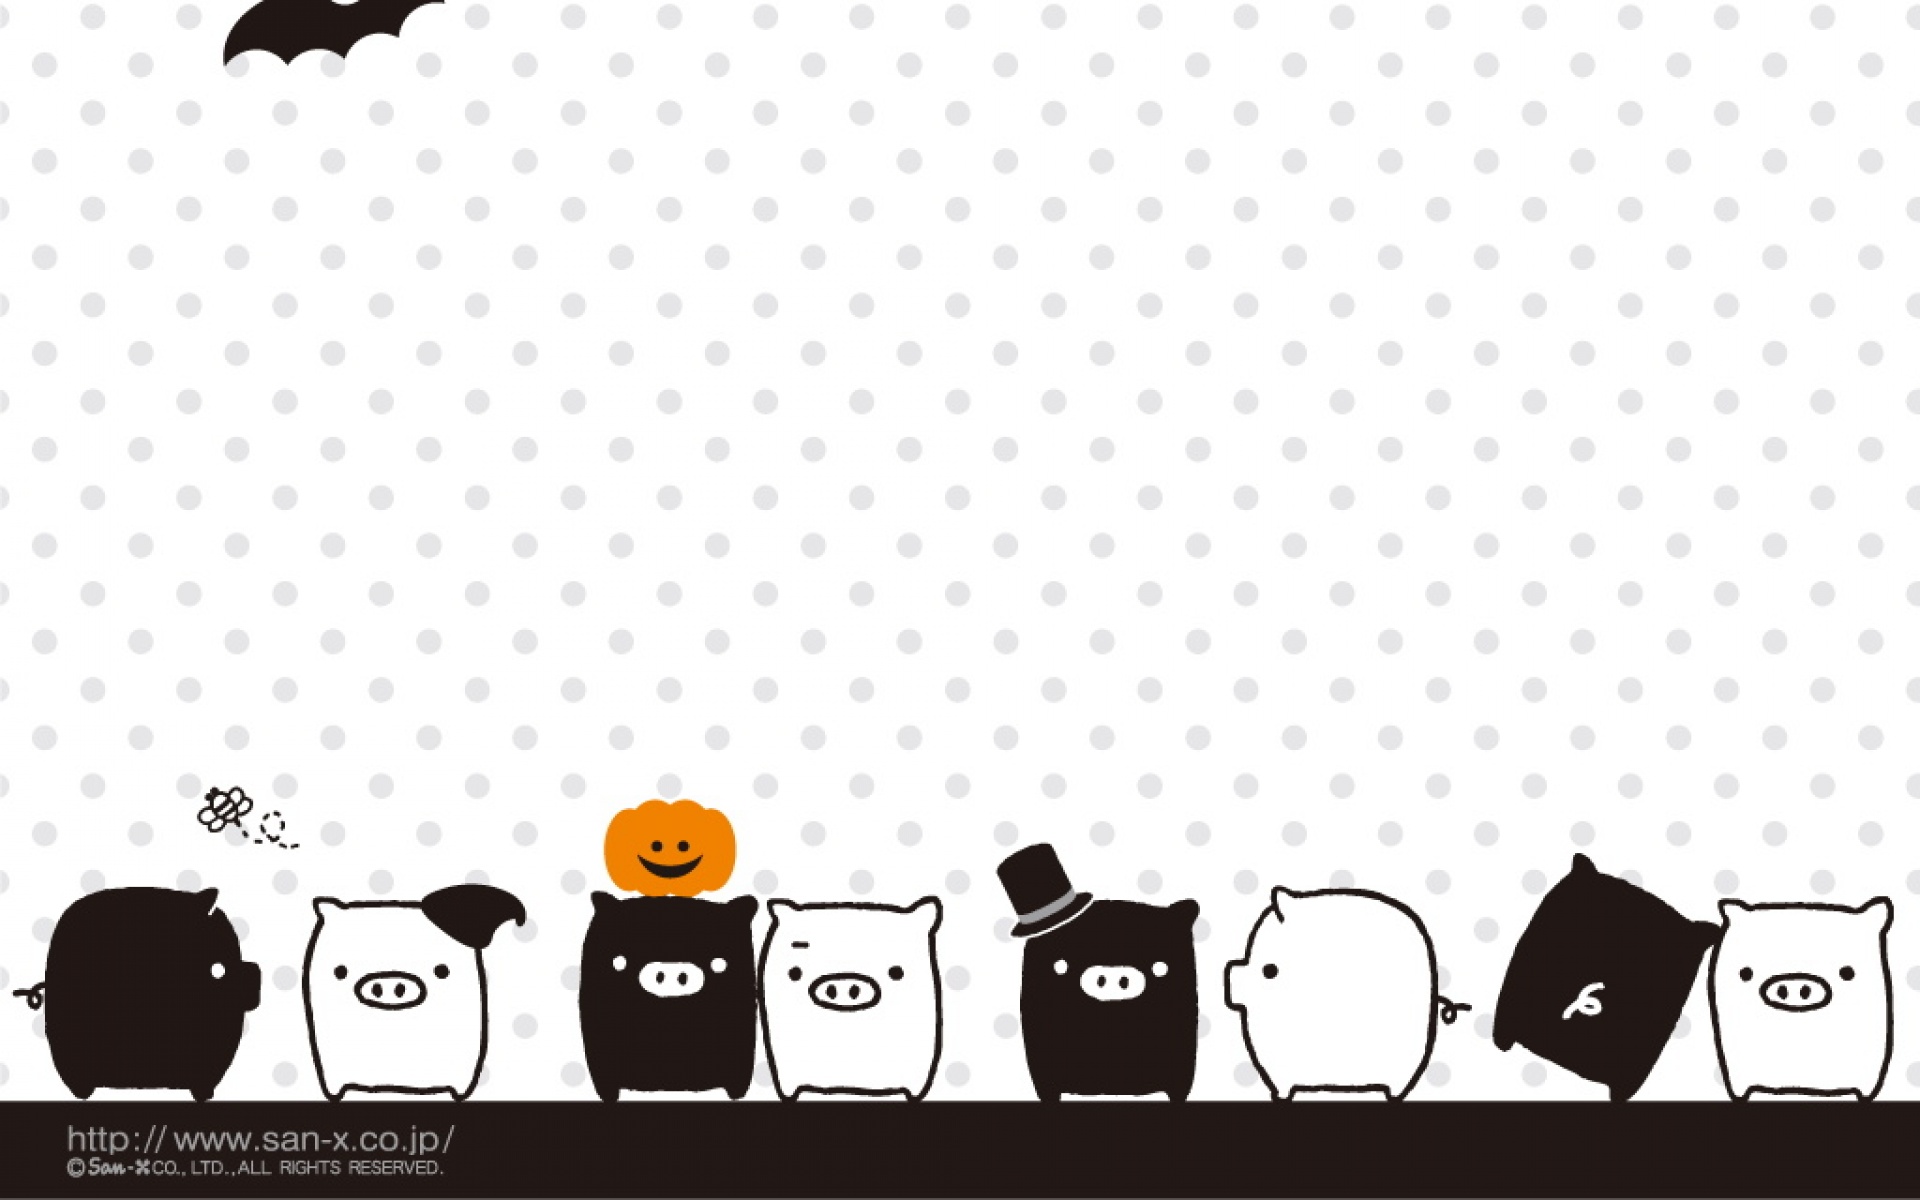 Mono KuRo BOO wallpapers: Lovely black pig and white pig cartoon